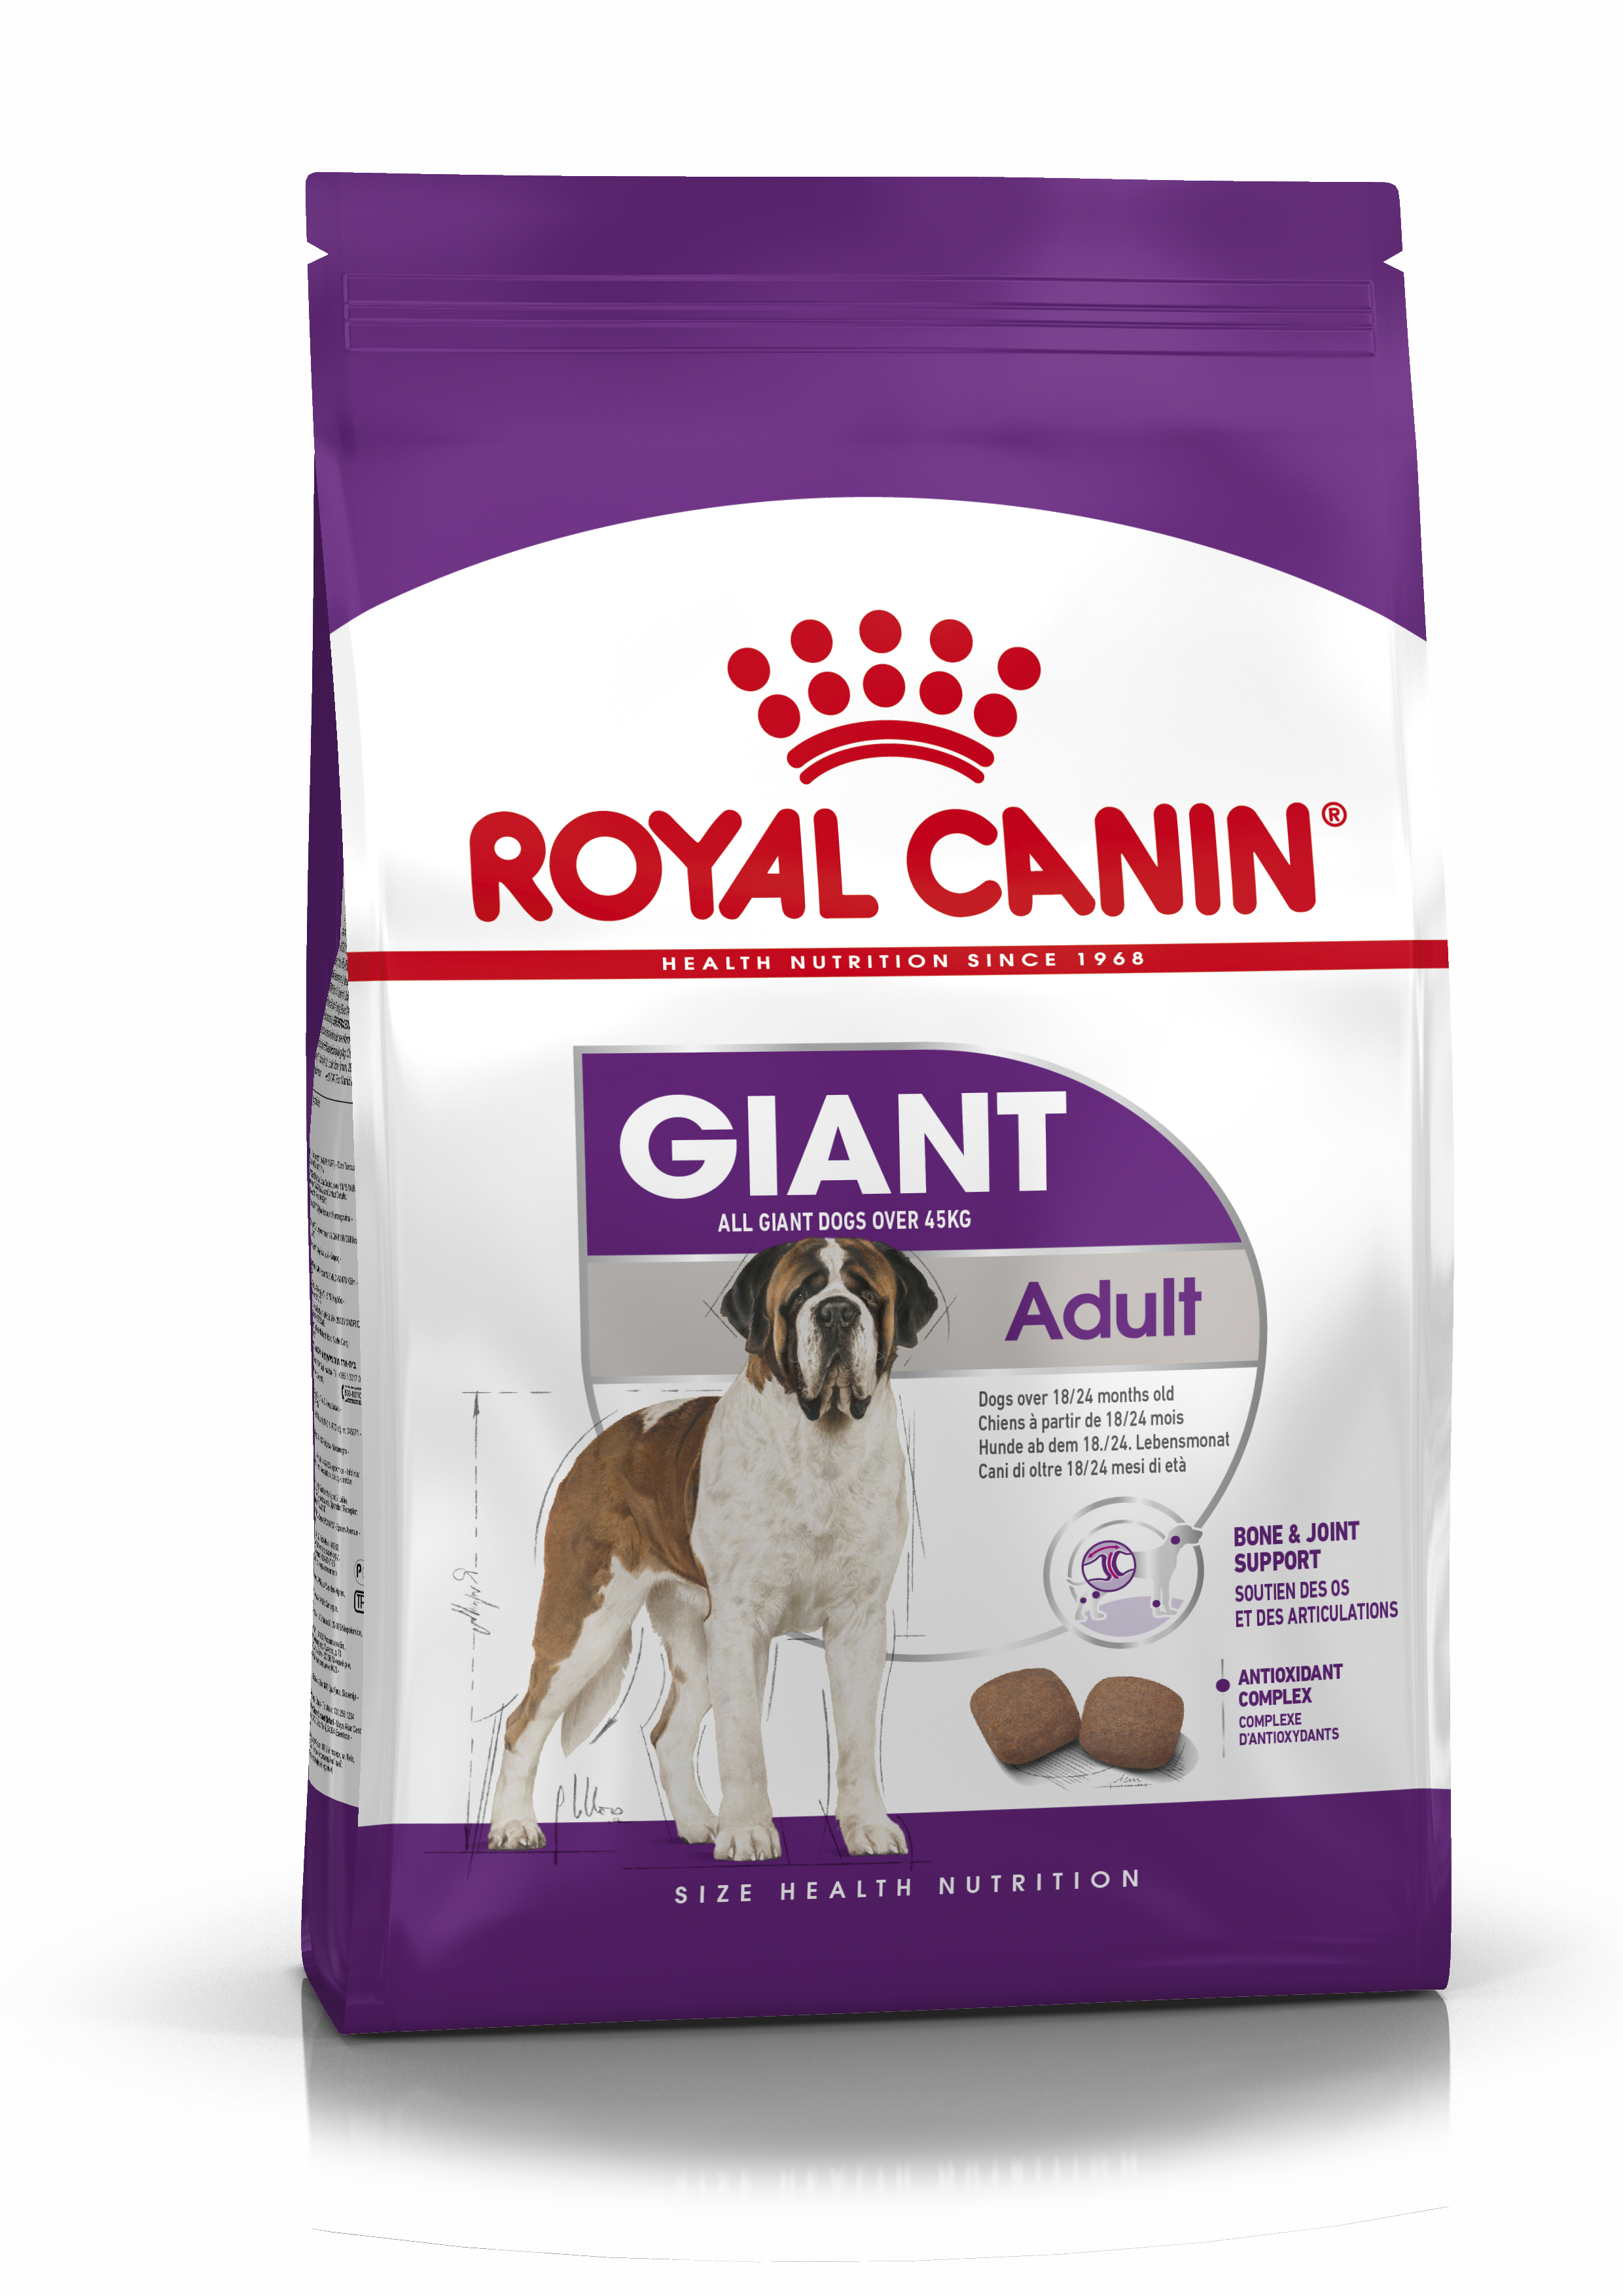 Afbeelding Royal Canin Giant adult hondenvoer 4 kg door Brekz.nl